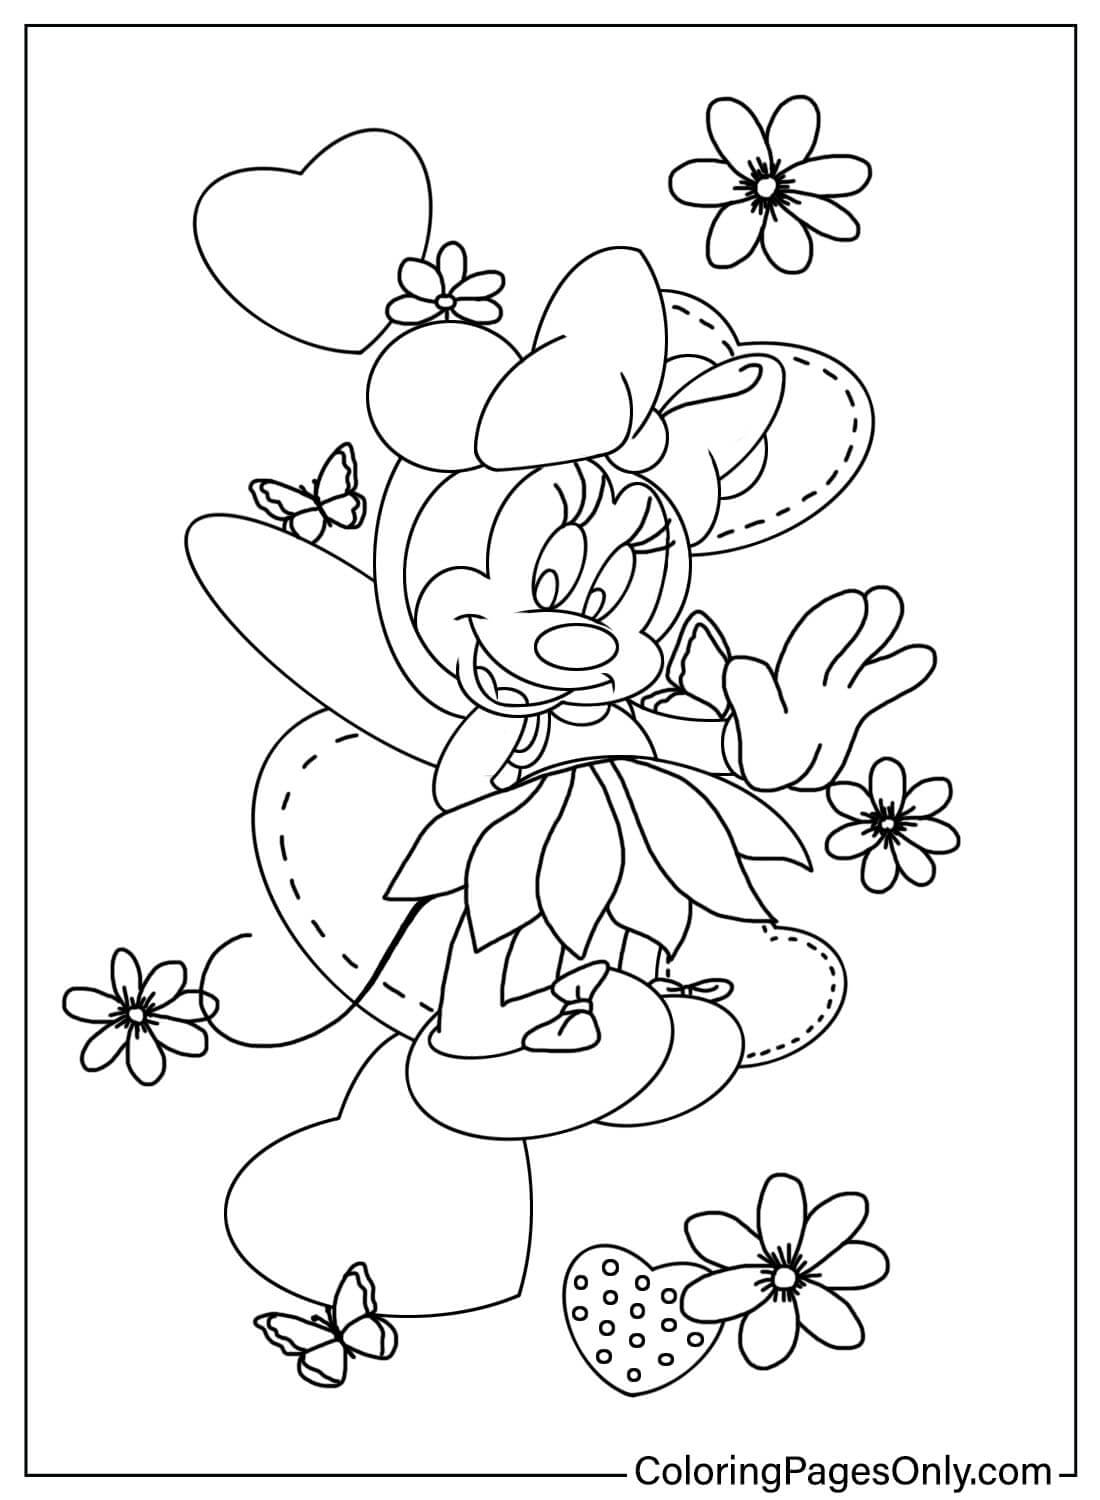 Linda página para colorir da Minnie Mouse da Minnie Mouse